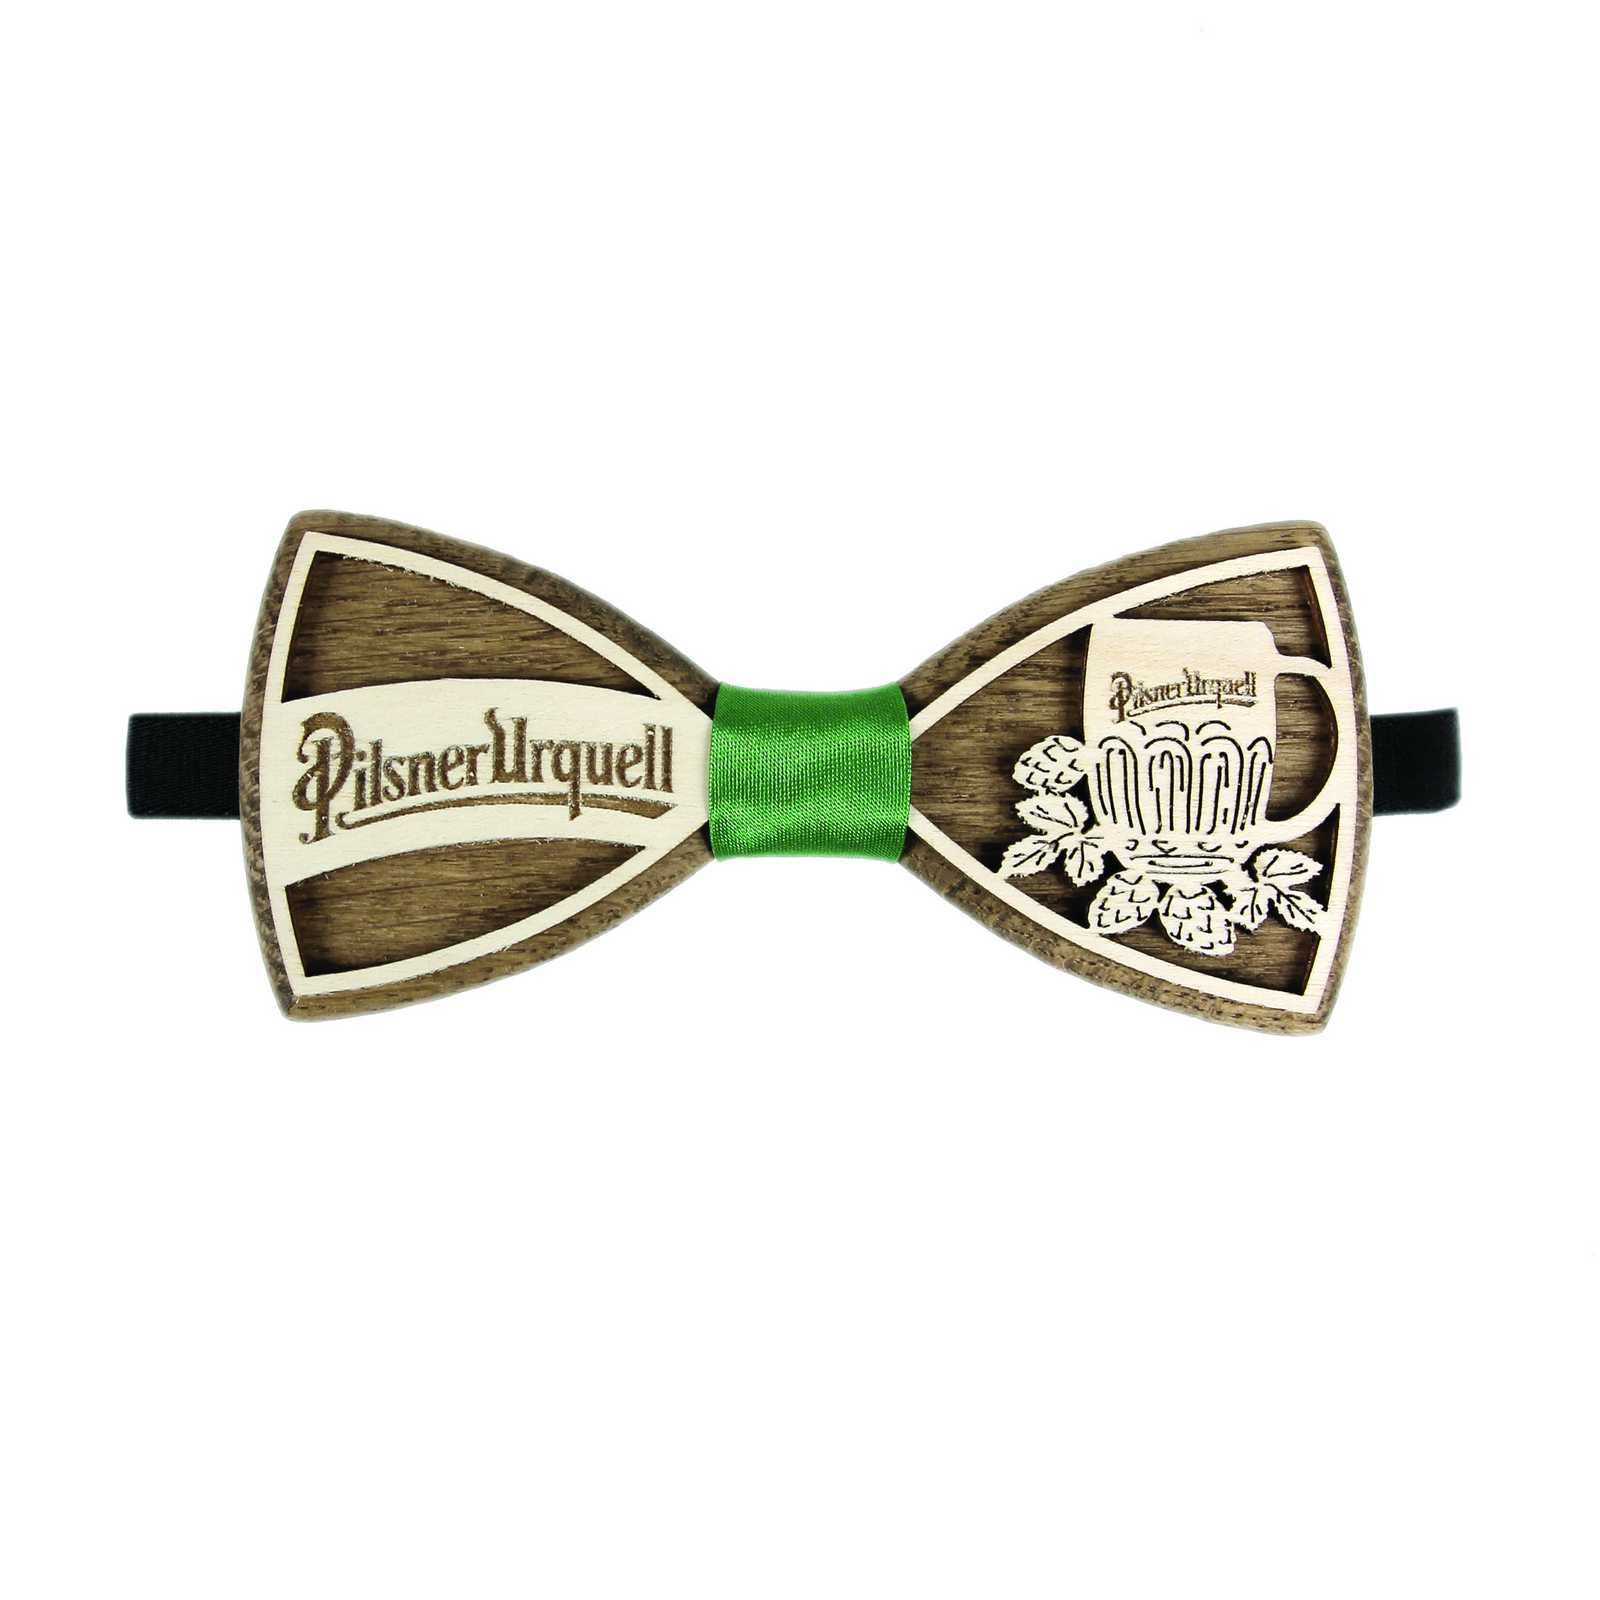 Wooden Pilsner Urquell Bow Tie